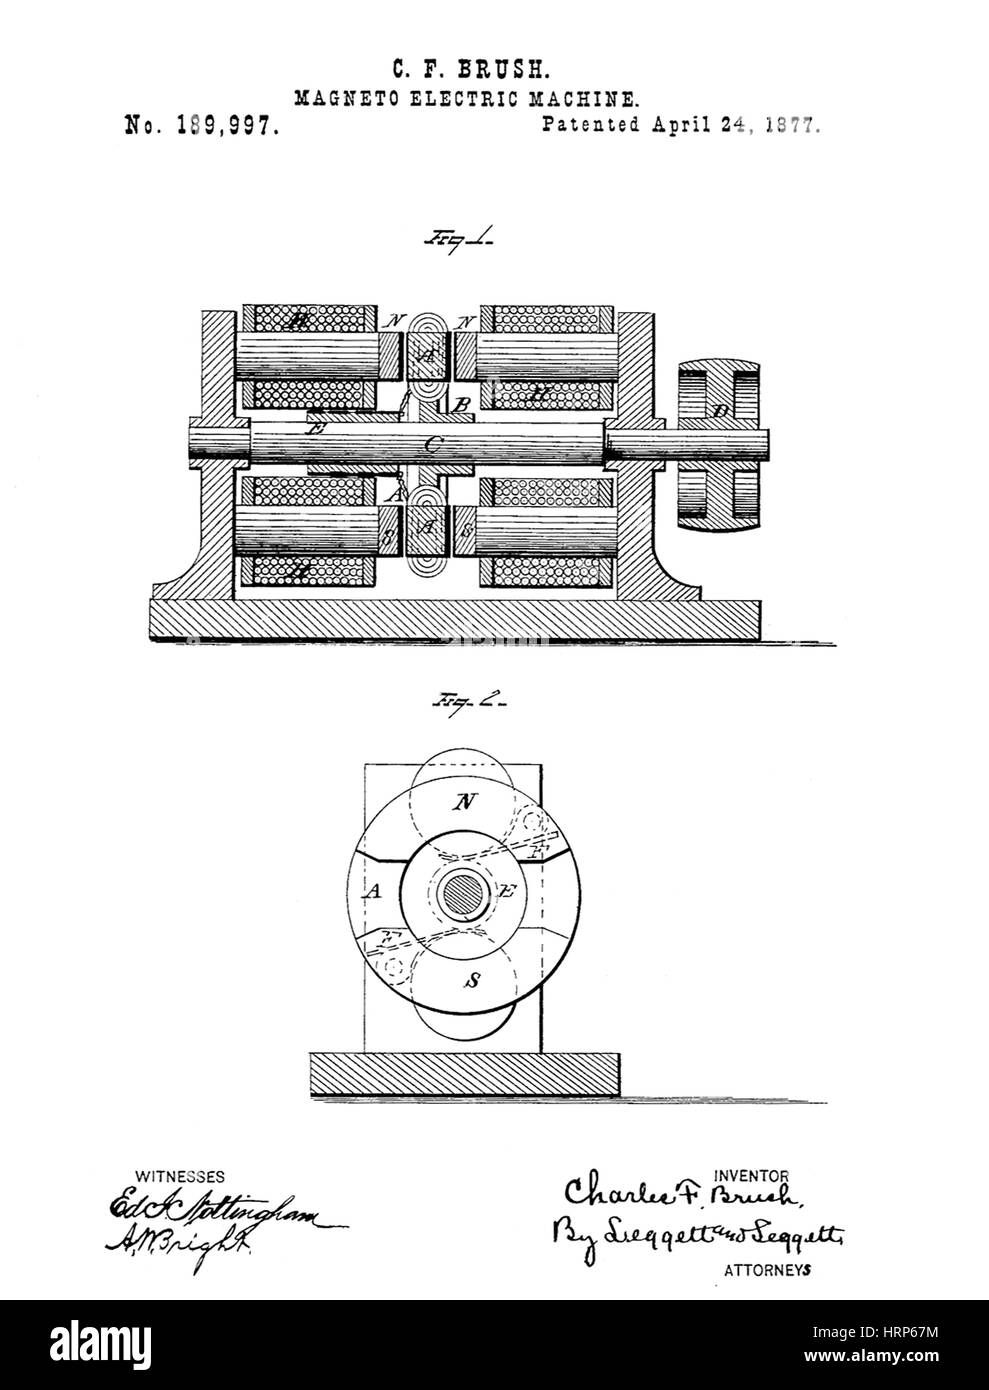 Brush Magneto-Electric Machine Patent, 1877 Stock Photo